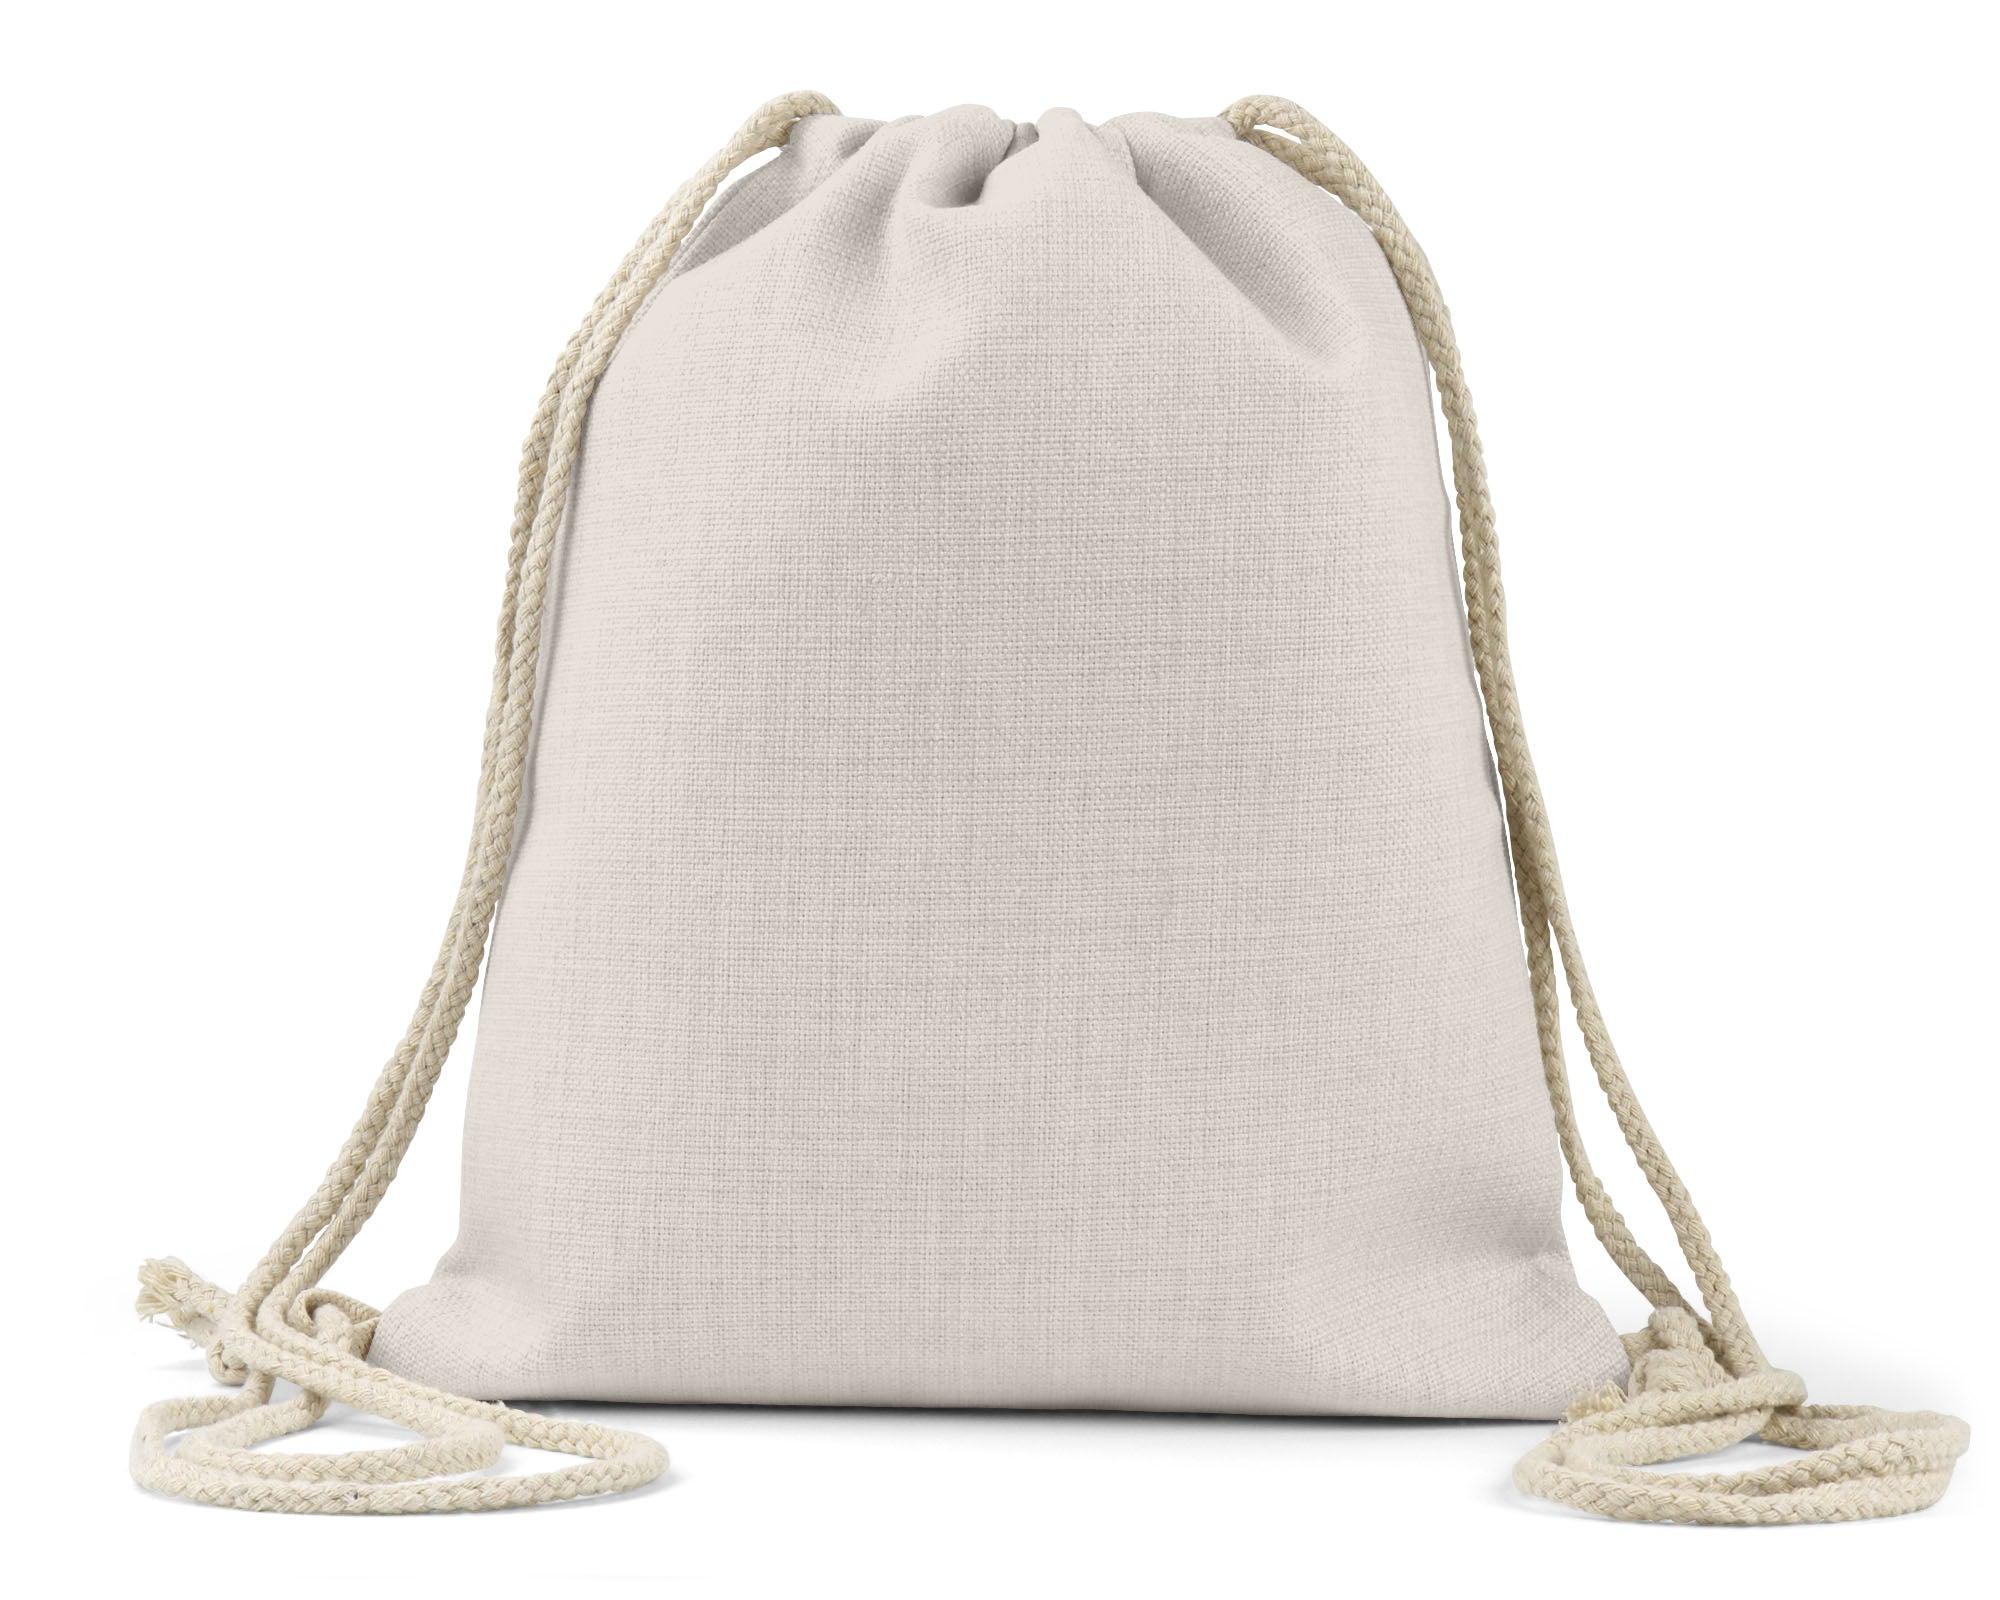 Blank/Customizable Linen Drawstring Bag